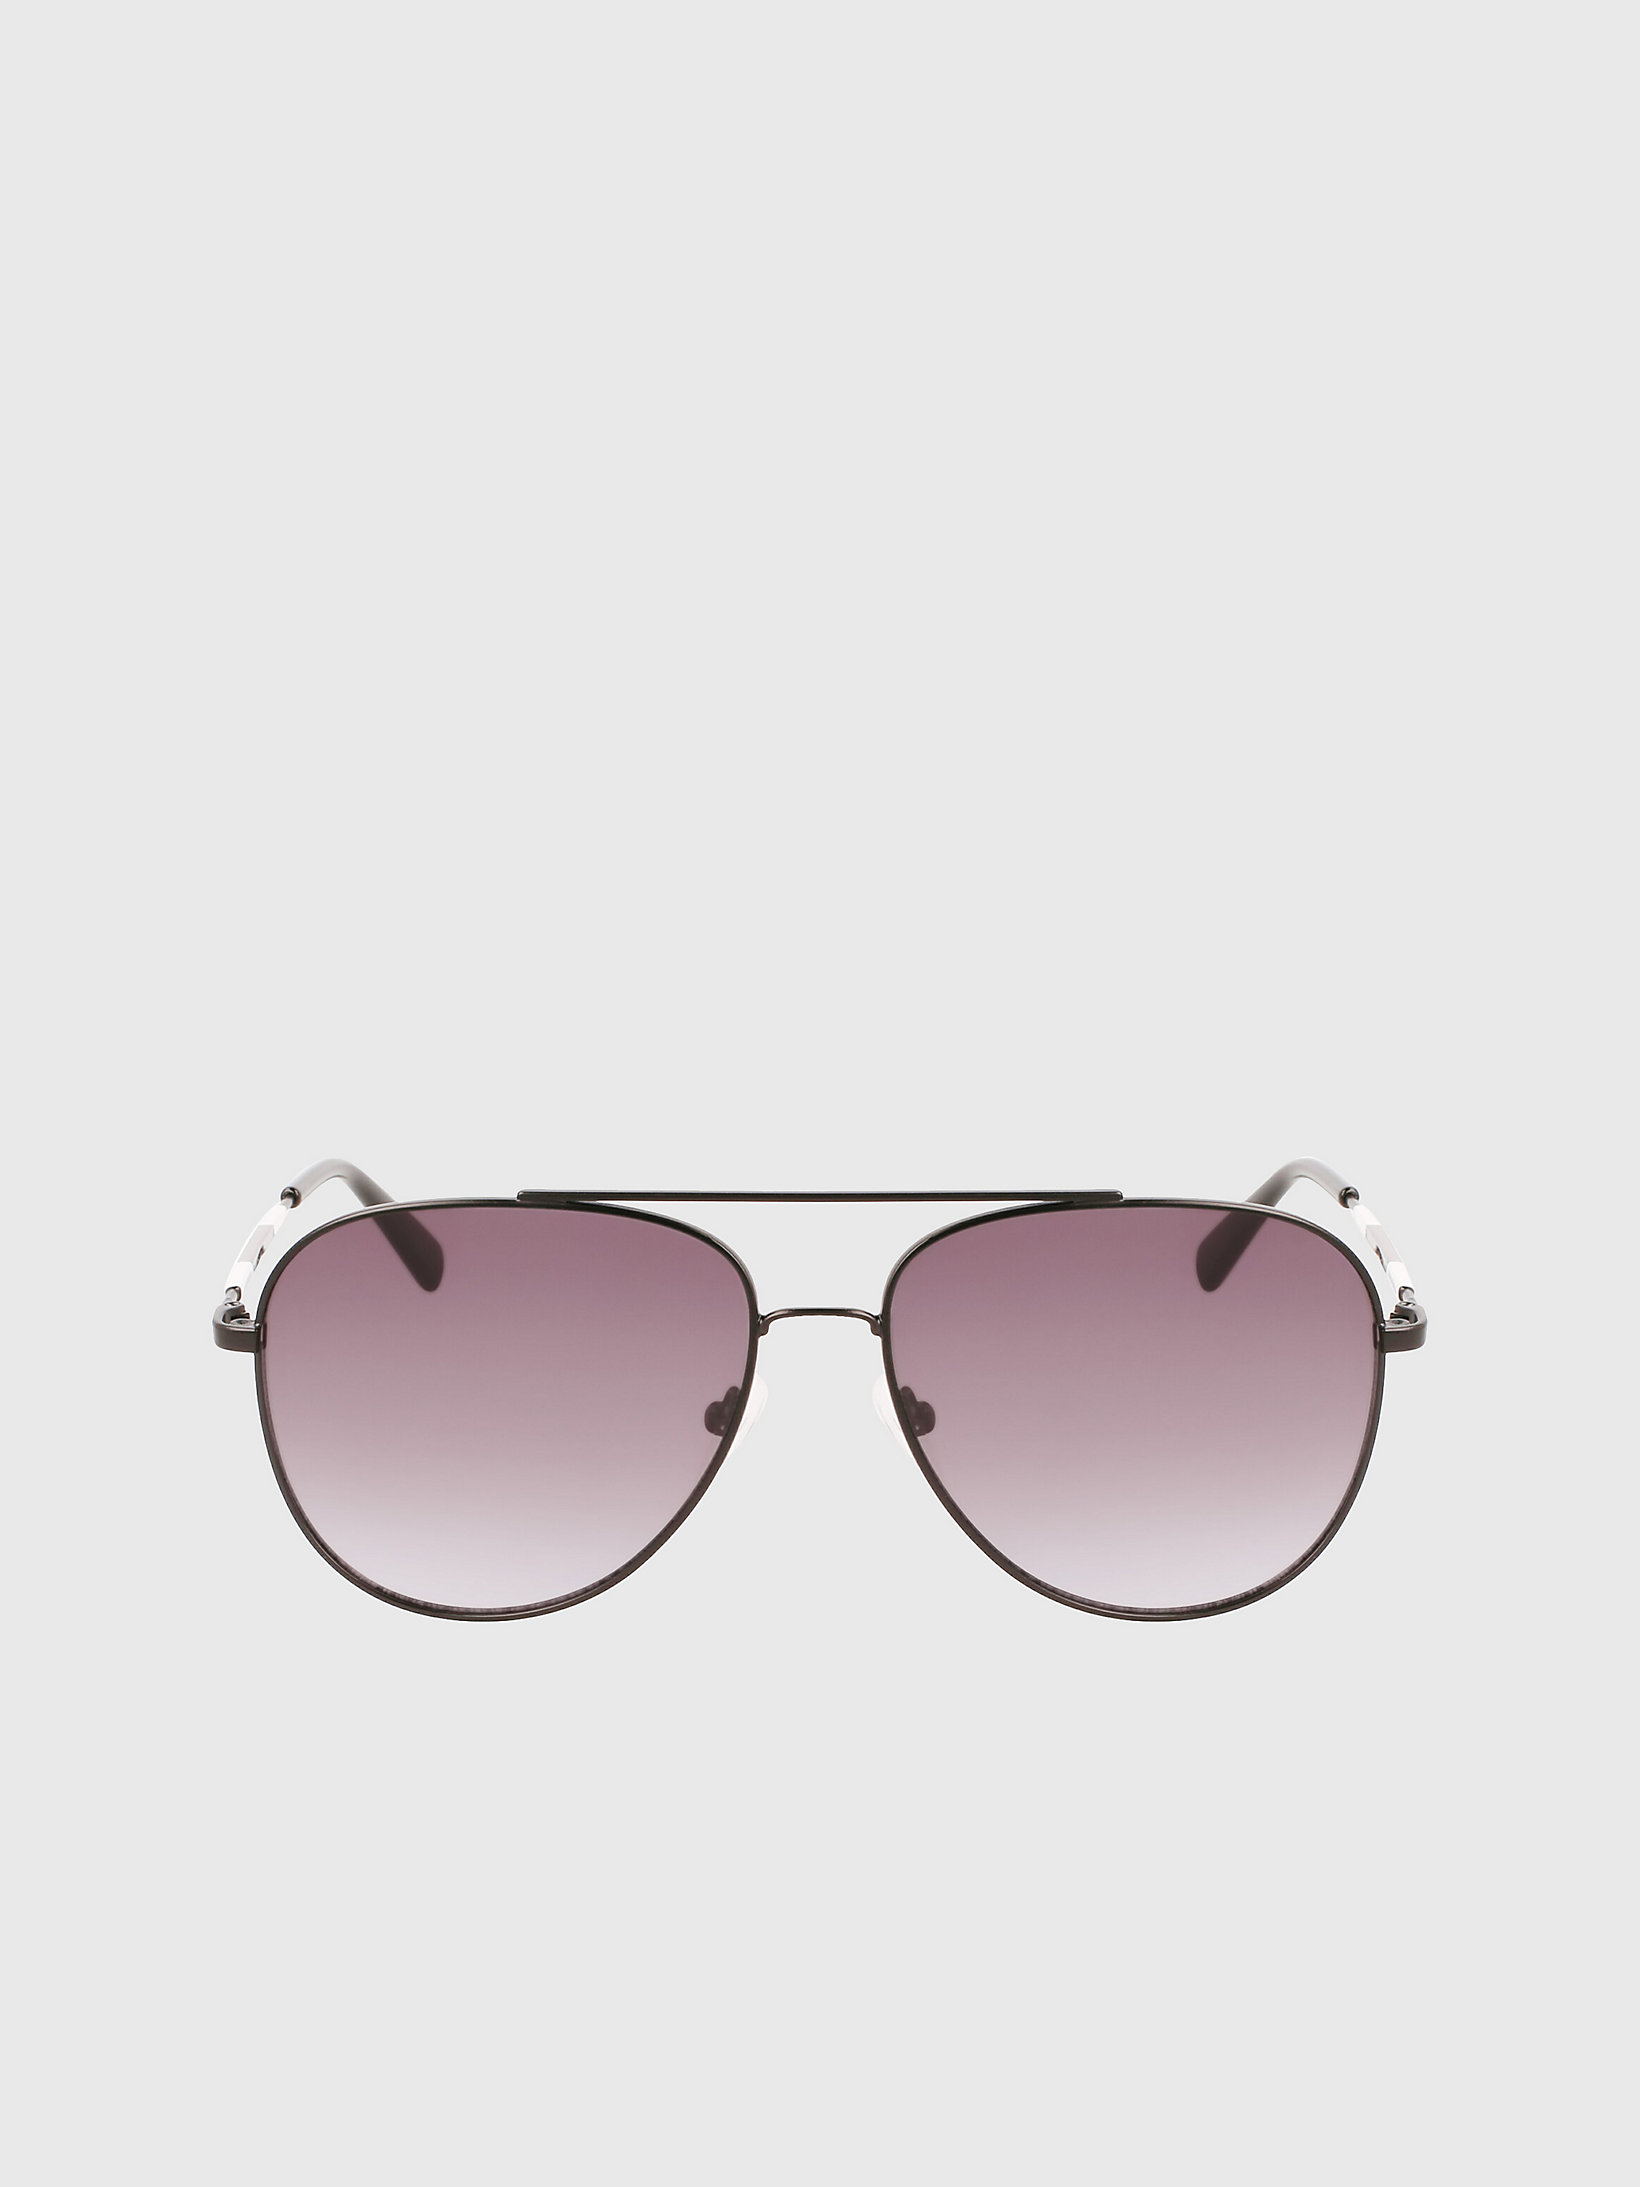 Matte Black Aviator Sunglasses 0ckj22201s undefined unisex Calvin Klein